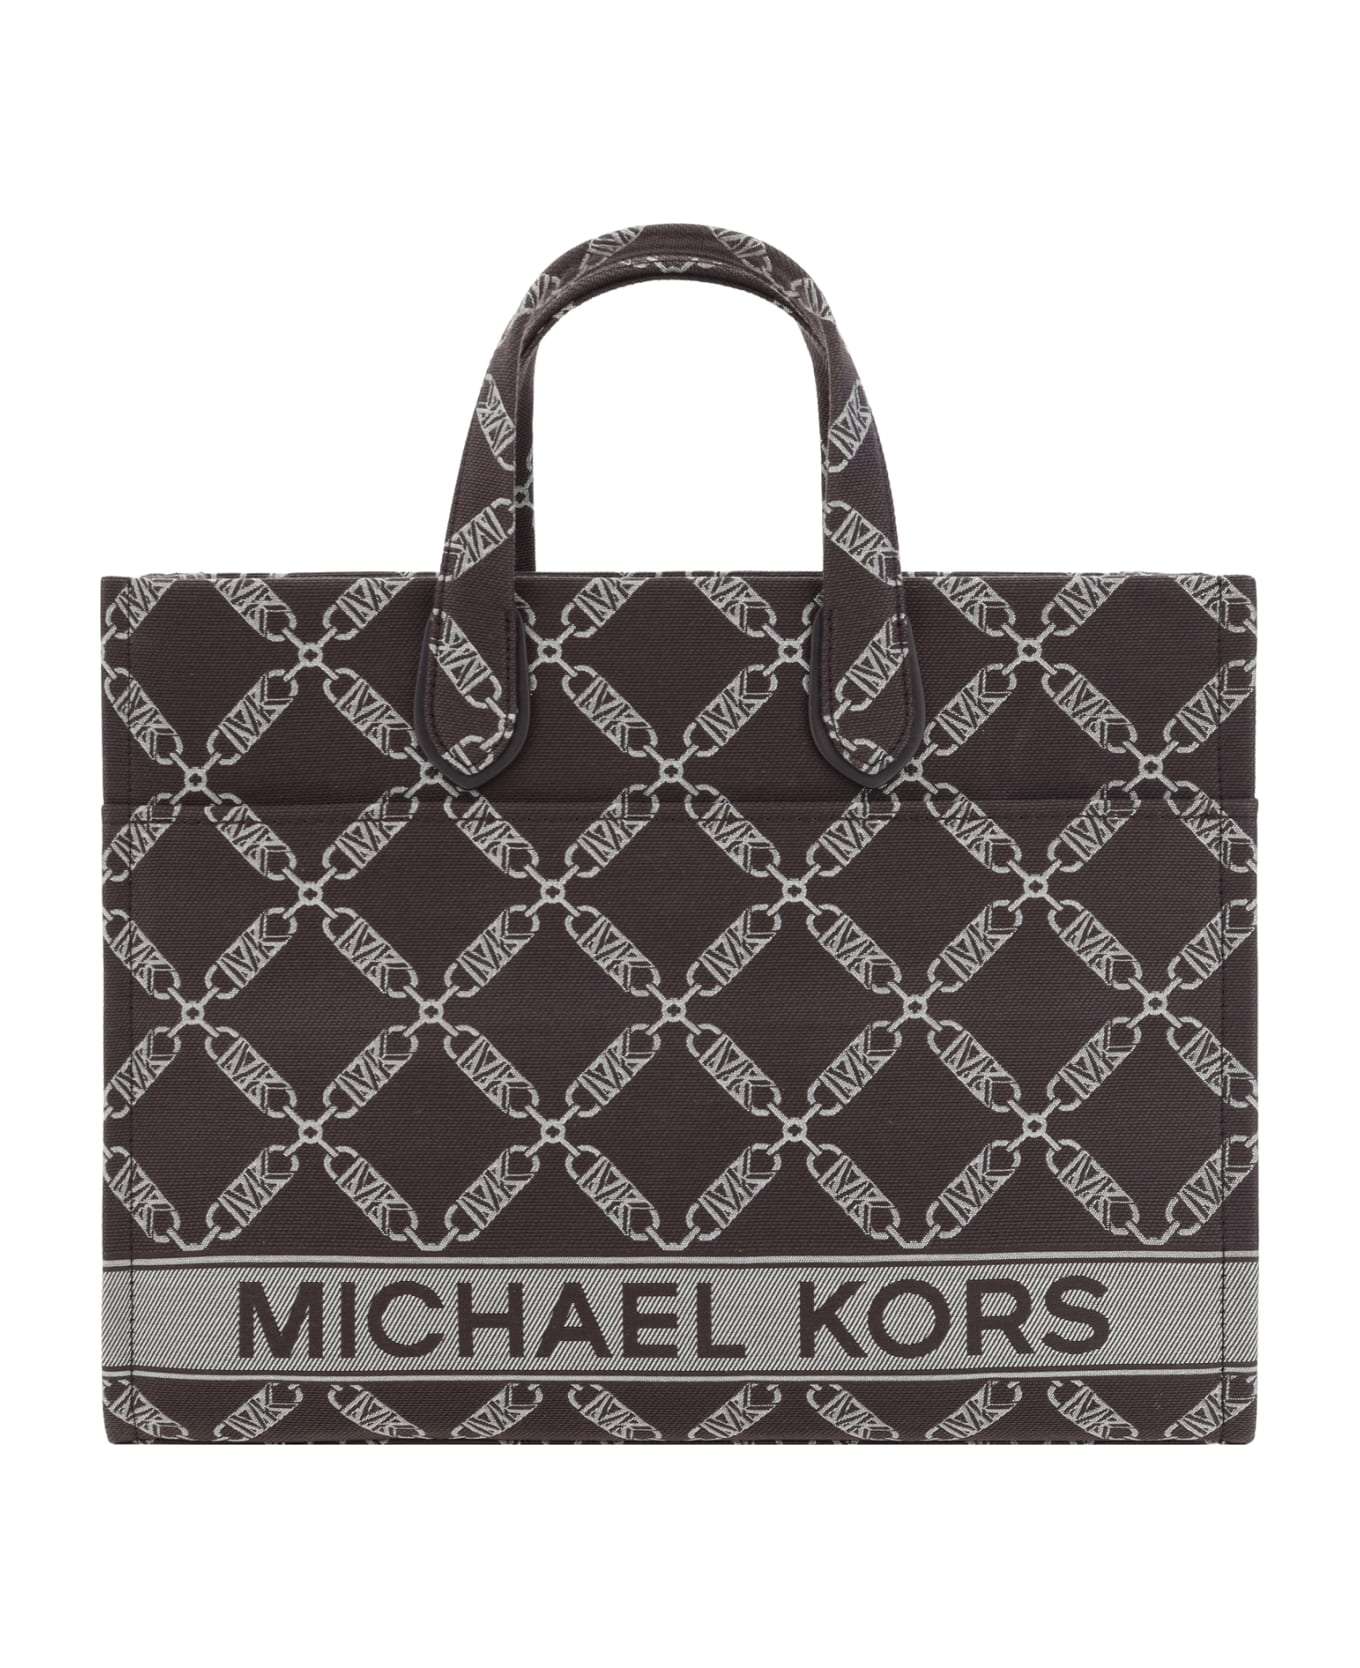 Michael Kors Gigi Tote Bag - Choc Multi